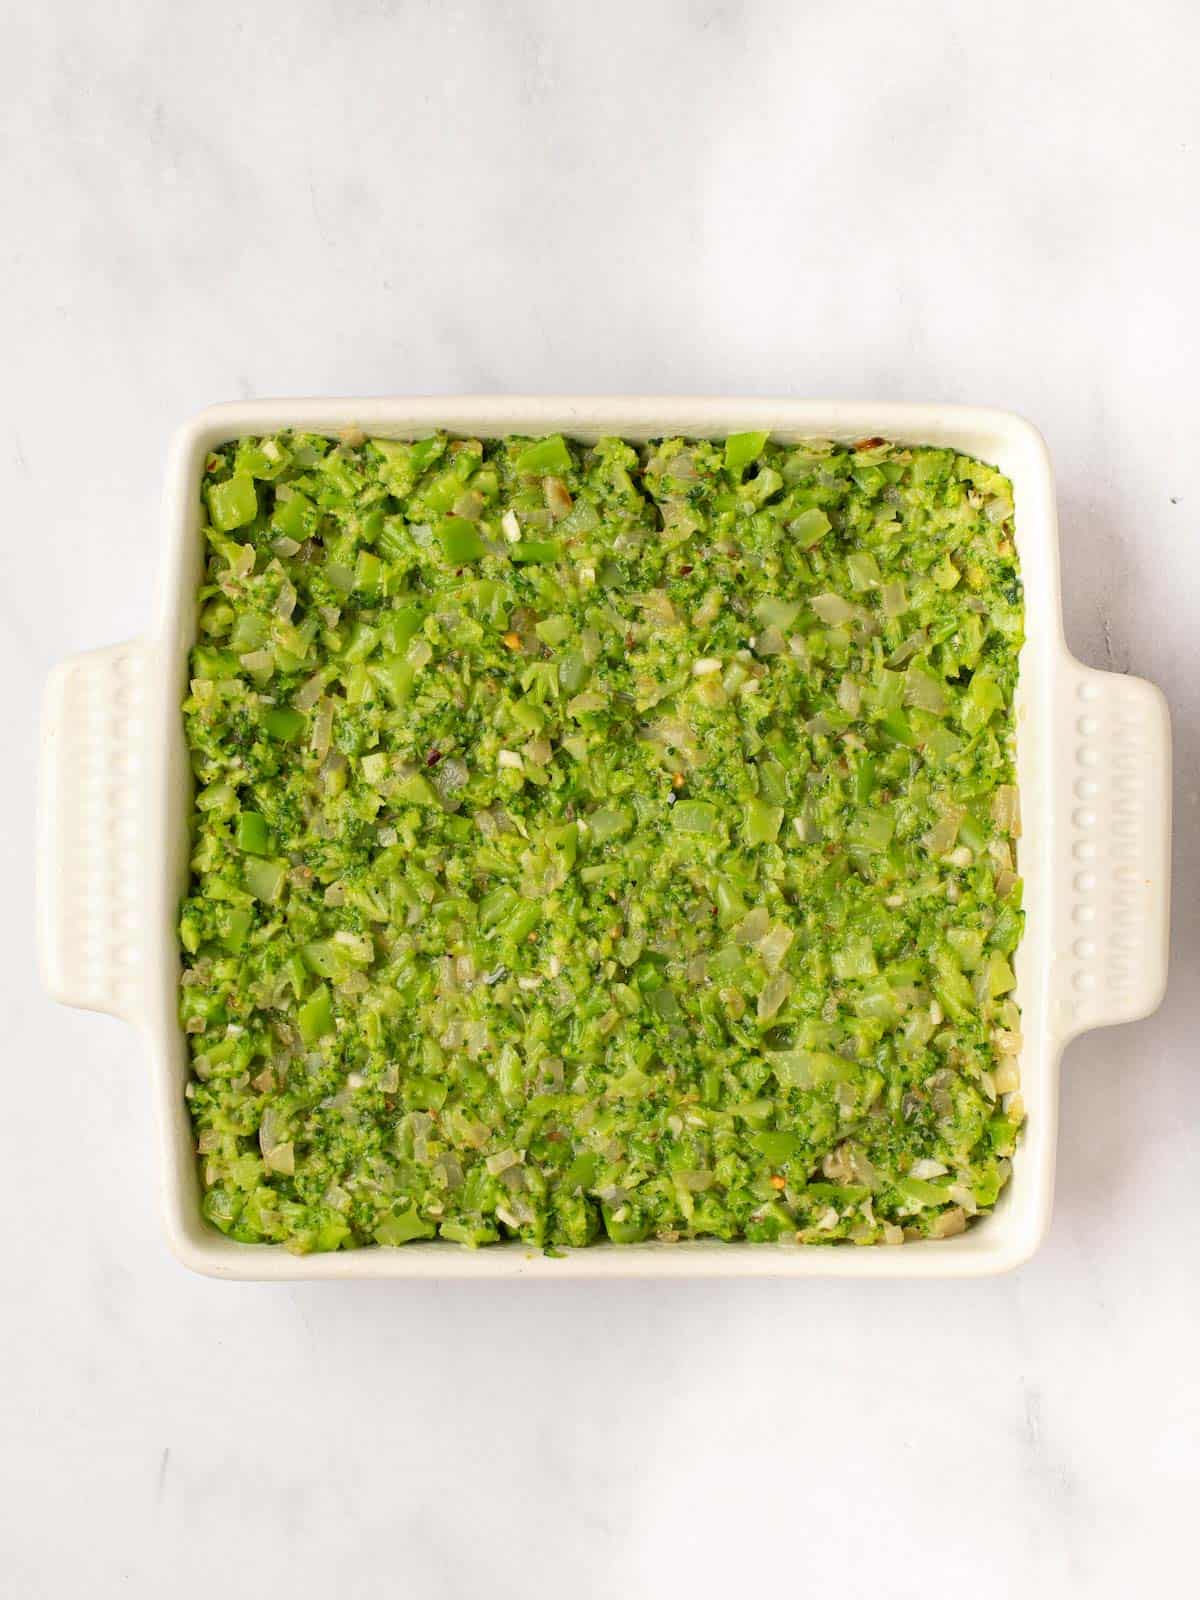 A dish of broccoli kugel before baking.